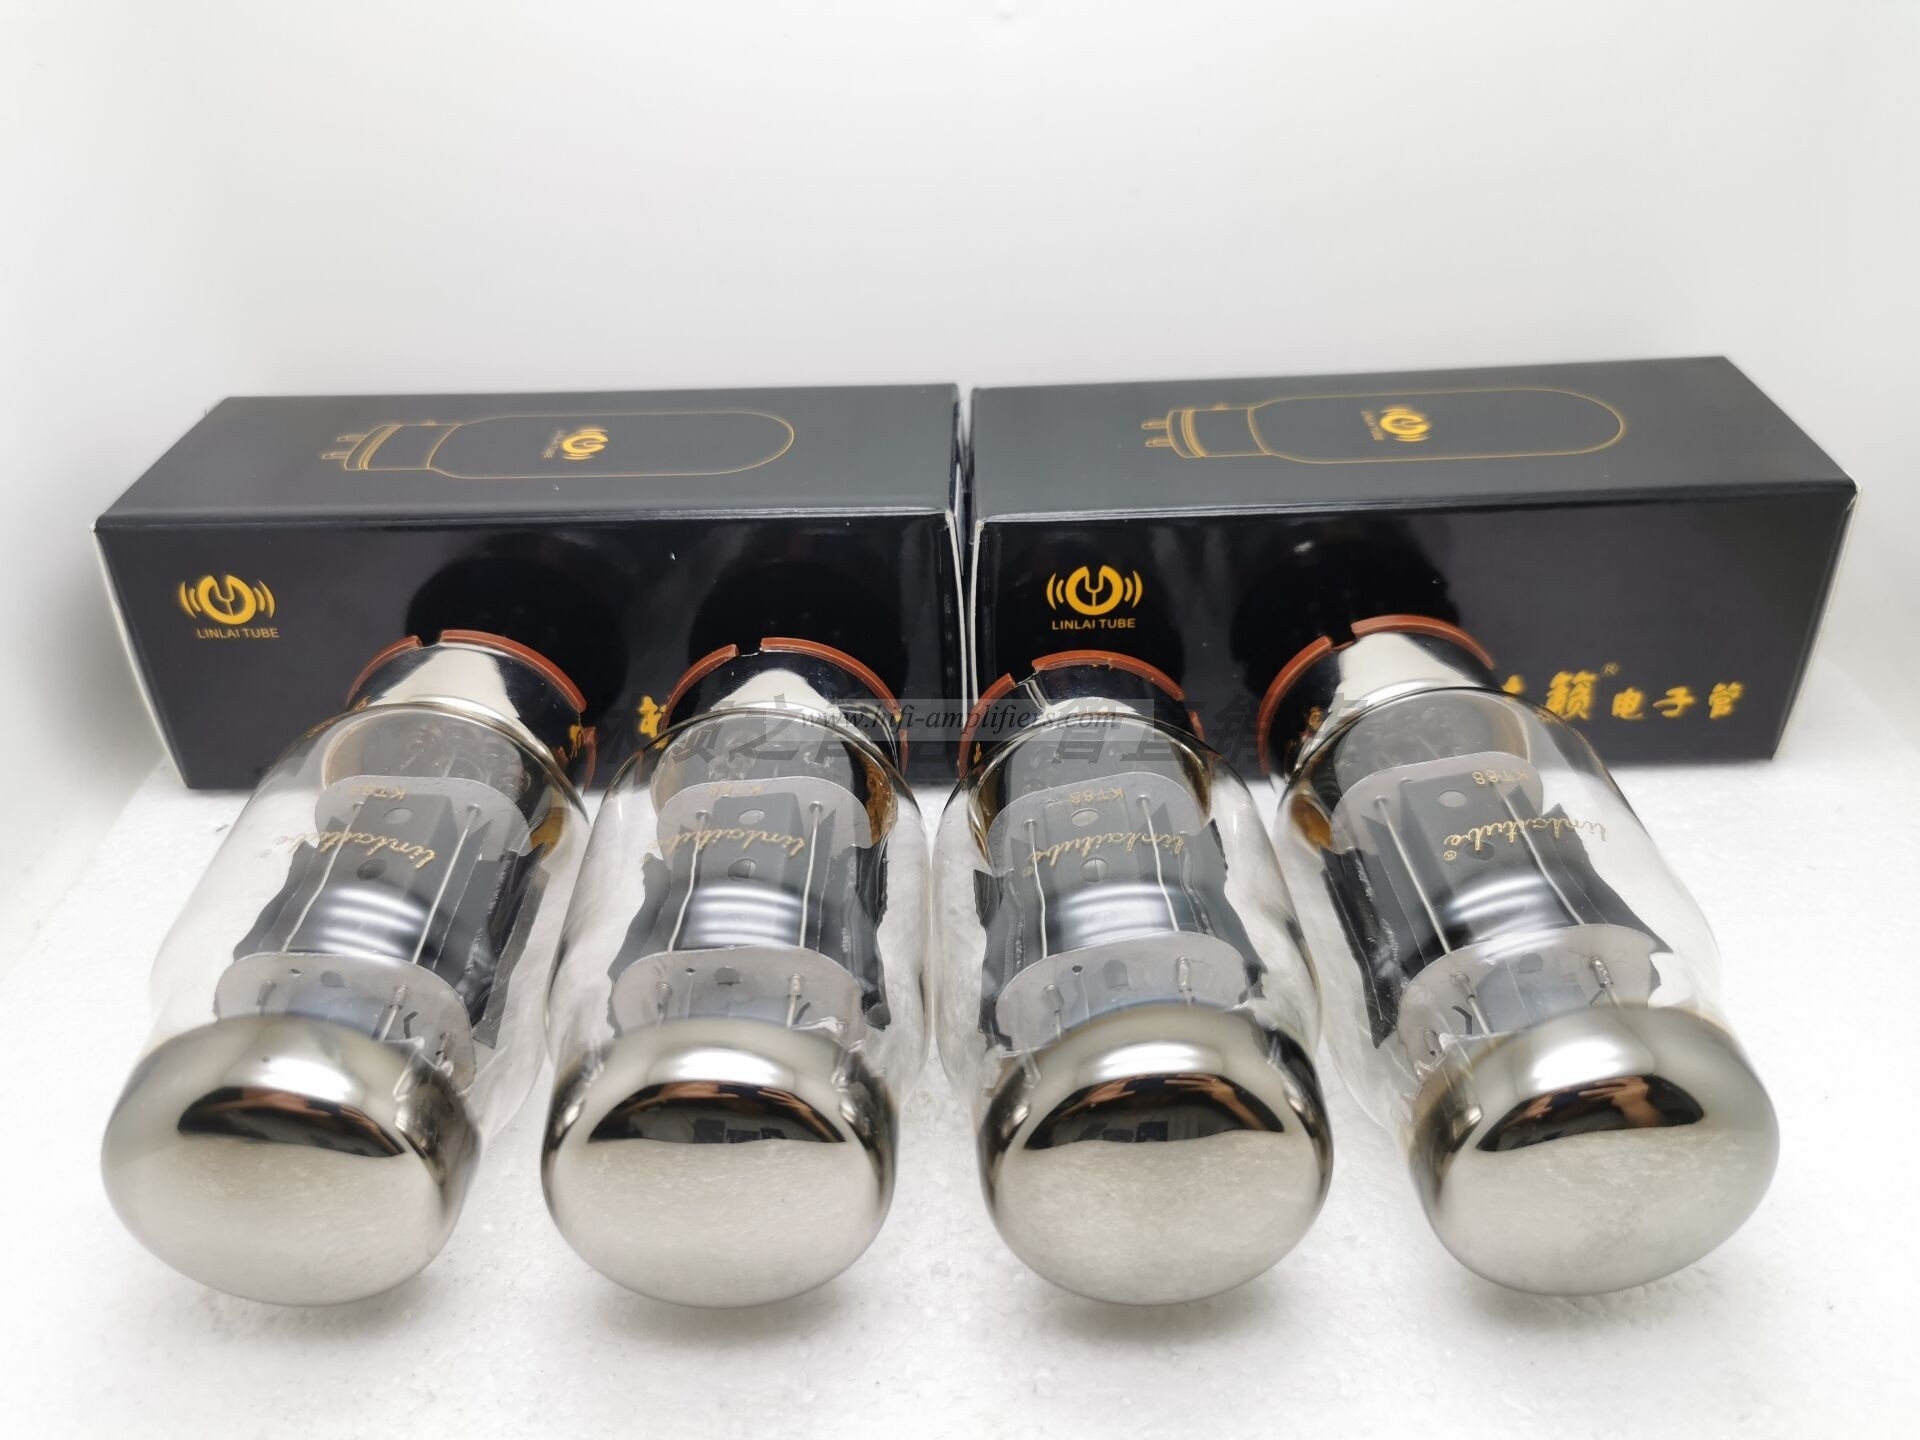 Linlai serie HiFi KT88 valvola elettronica tubo a vuoto abbinato quad (4 pezzi)